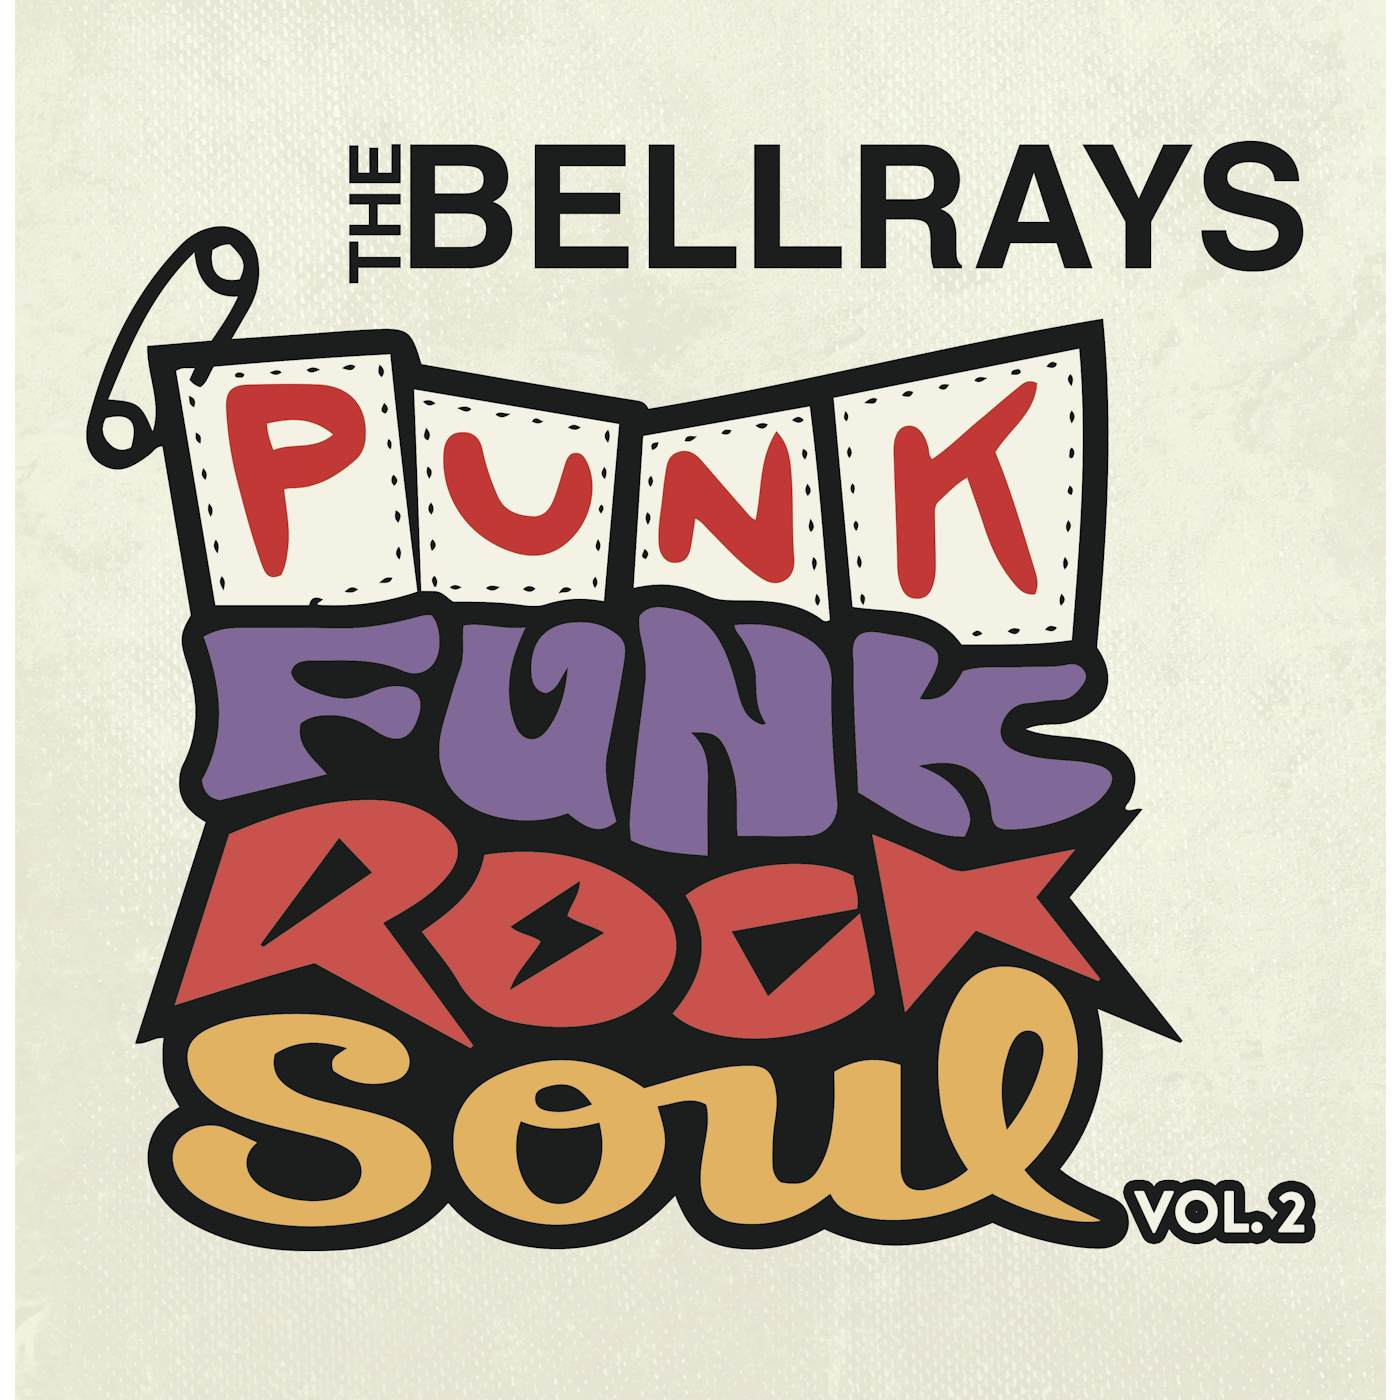 The BellRays PUNK FUNK ROCK SOUL, V.2 Vinyl Record